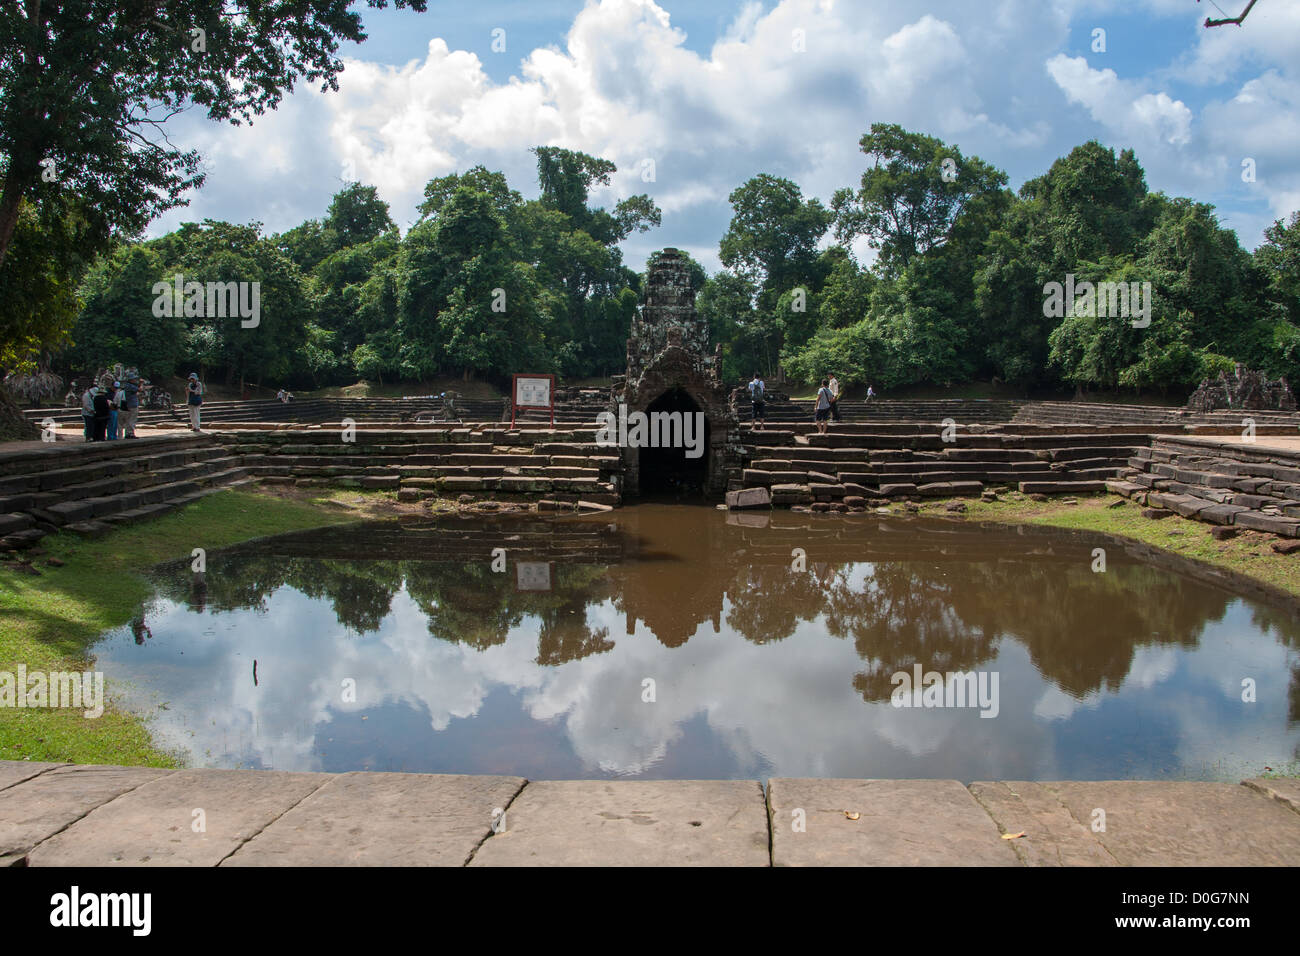 UNESCO World Heritage Site, Angkor, Siem Reap Provincia, Cambogia, Indocina, sud-est asiatico Foto Stock